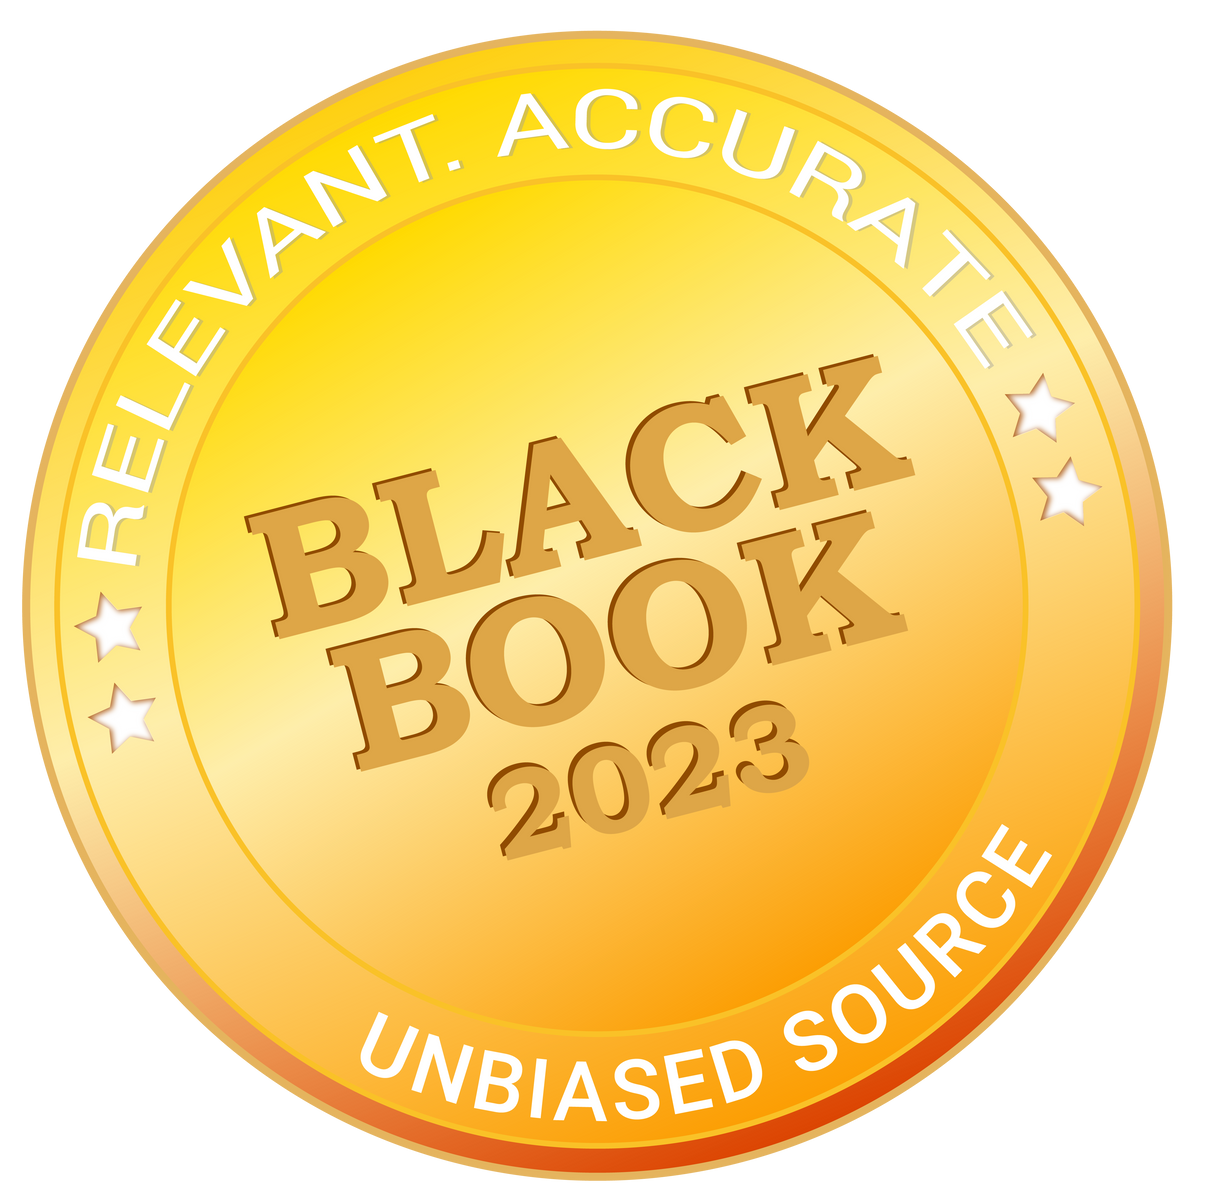 black book 2022